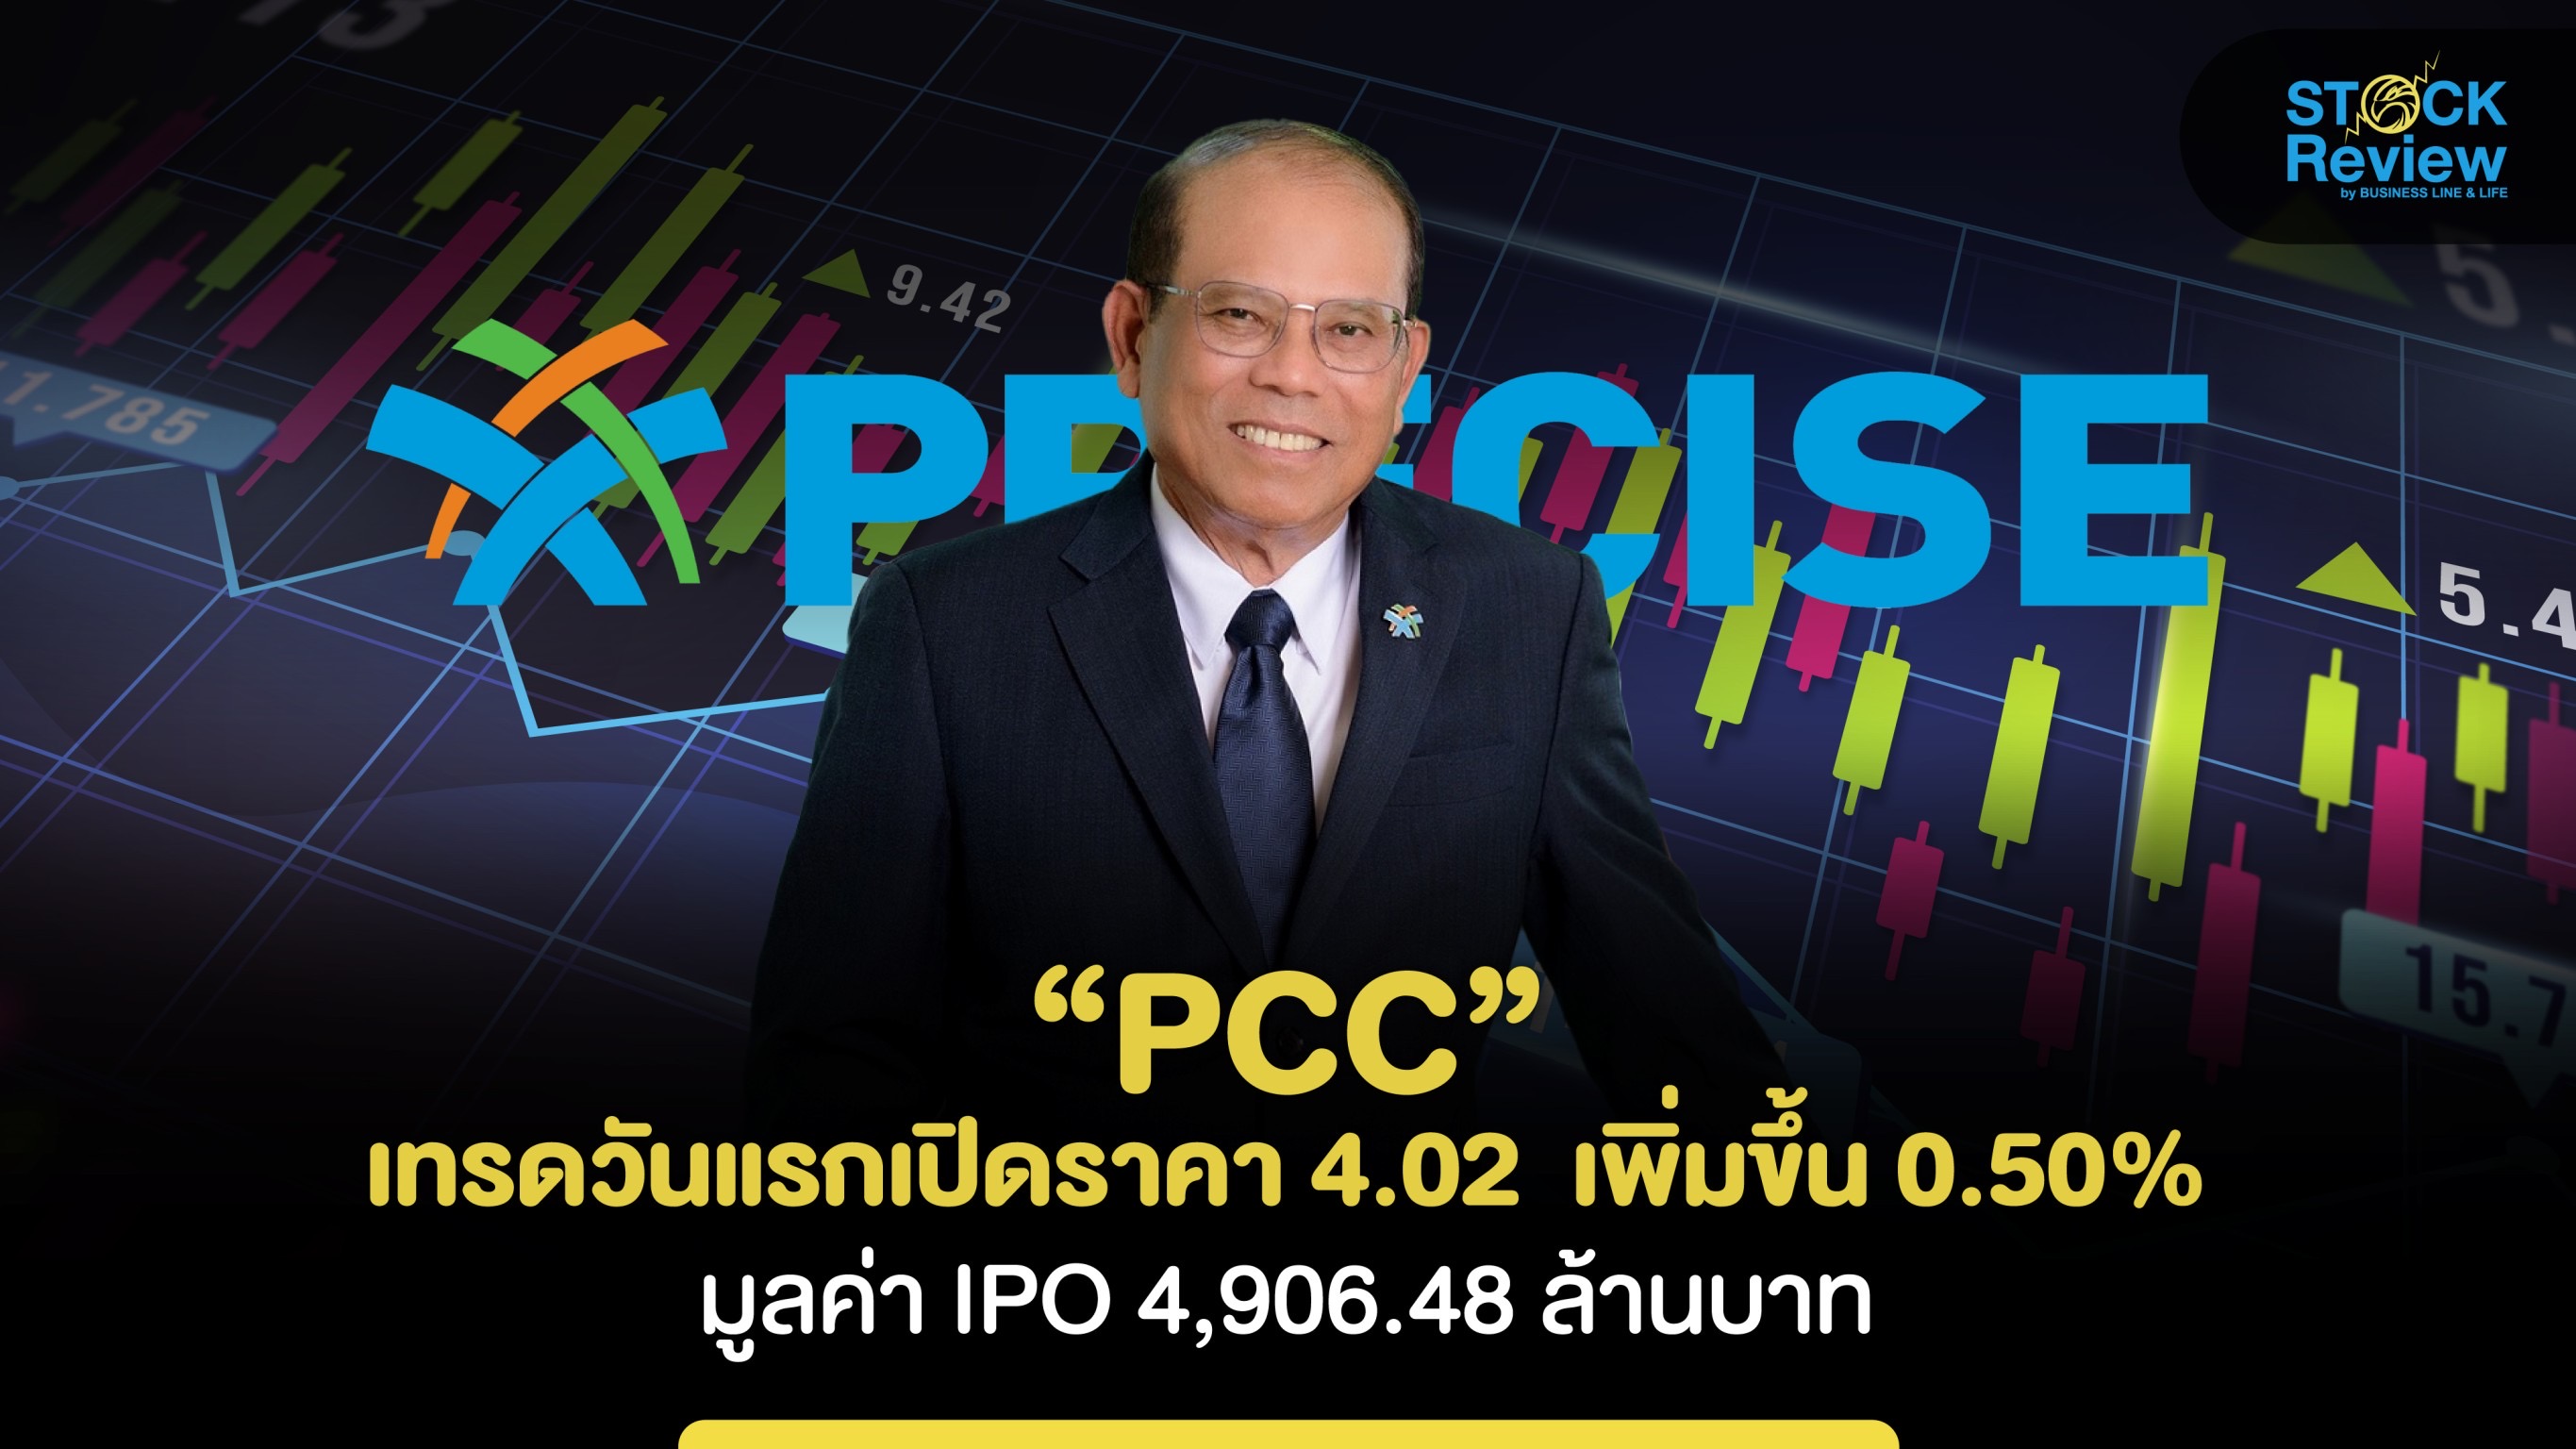 PCC เทรดวันแรก เปิดราคา 4.02  เพิ่มขึ้น 0.50%จอง 4 บาท  เทรดหมวดพลังงาน